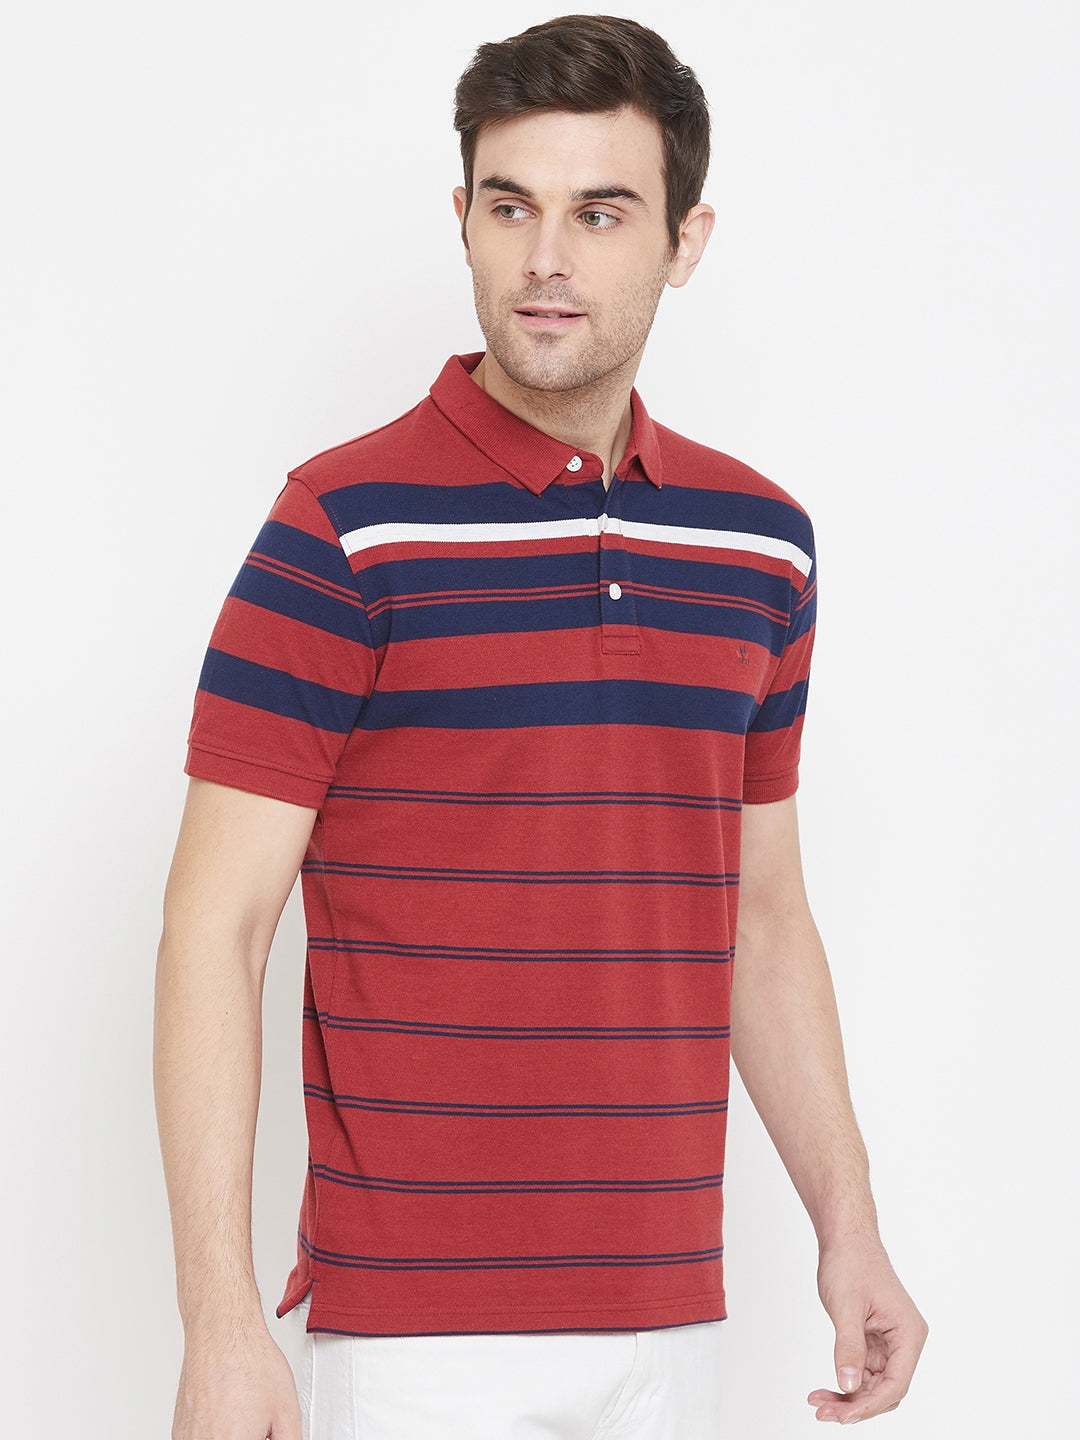 Red Striped T-shirt - Men T-Shirts